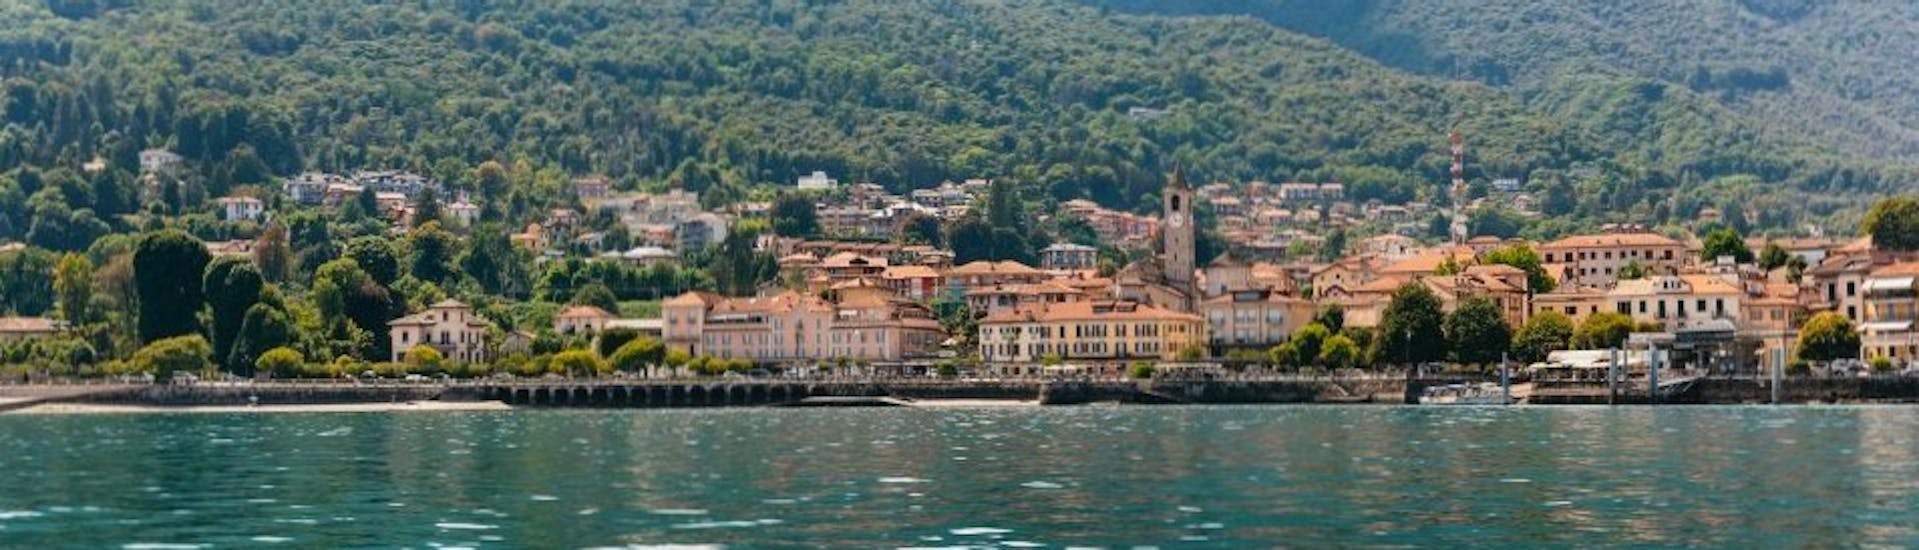 Balade privée en bateau Stresa - Isola dei Pescatori (Isola Superiore) avec Visites touristiques.